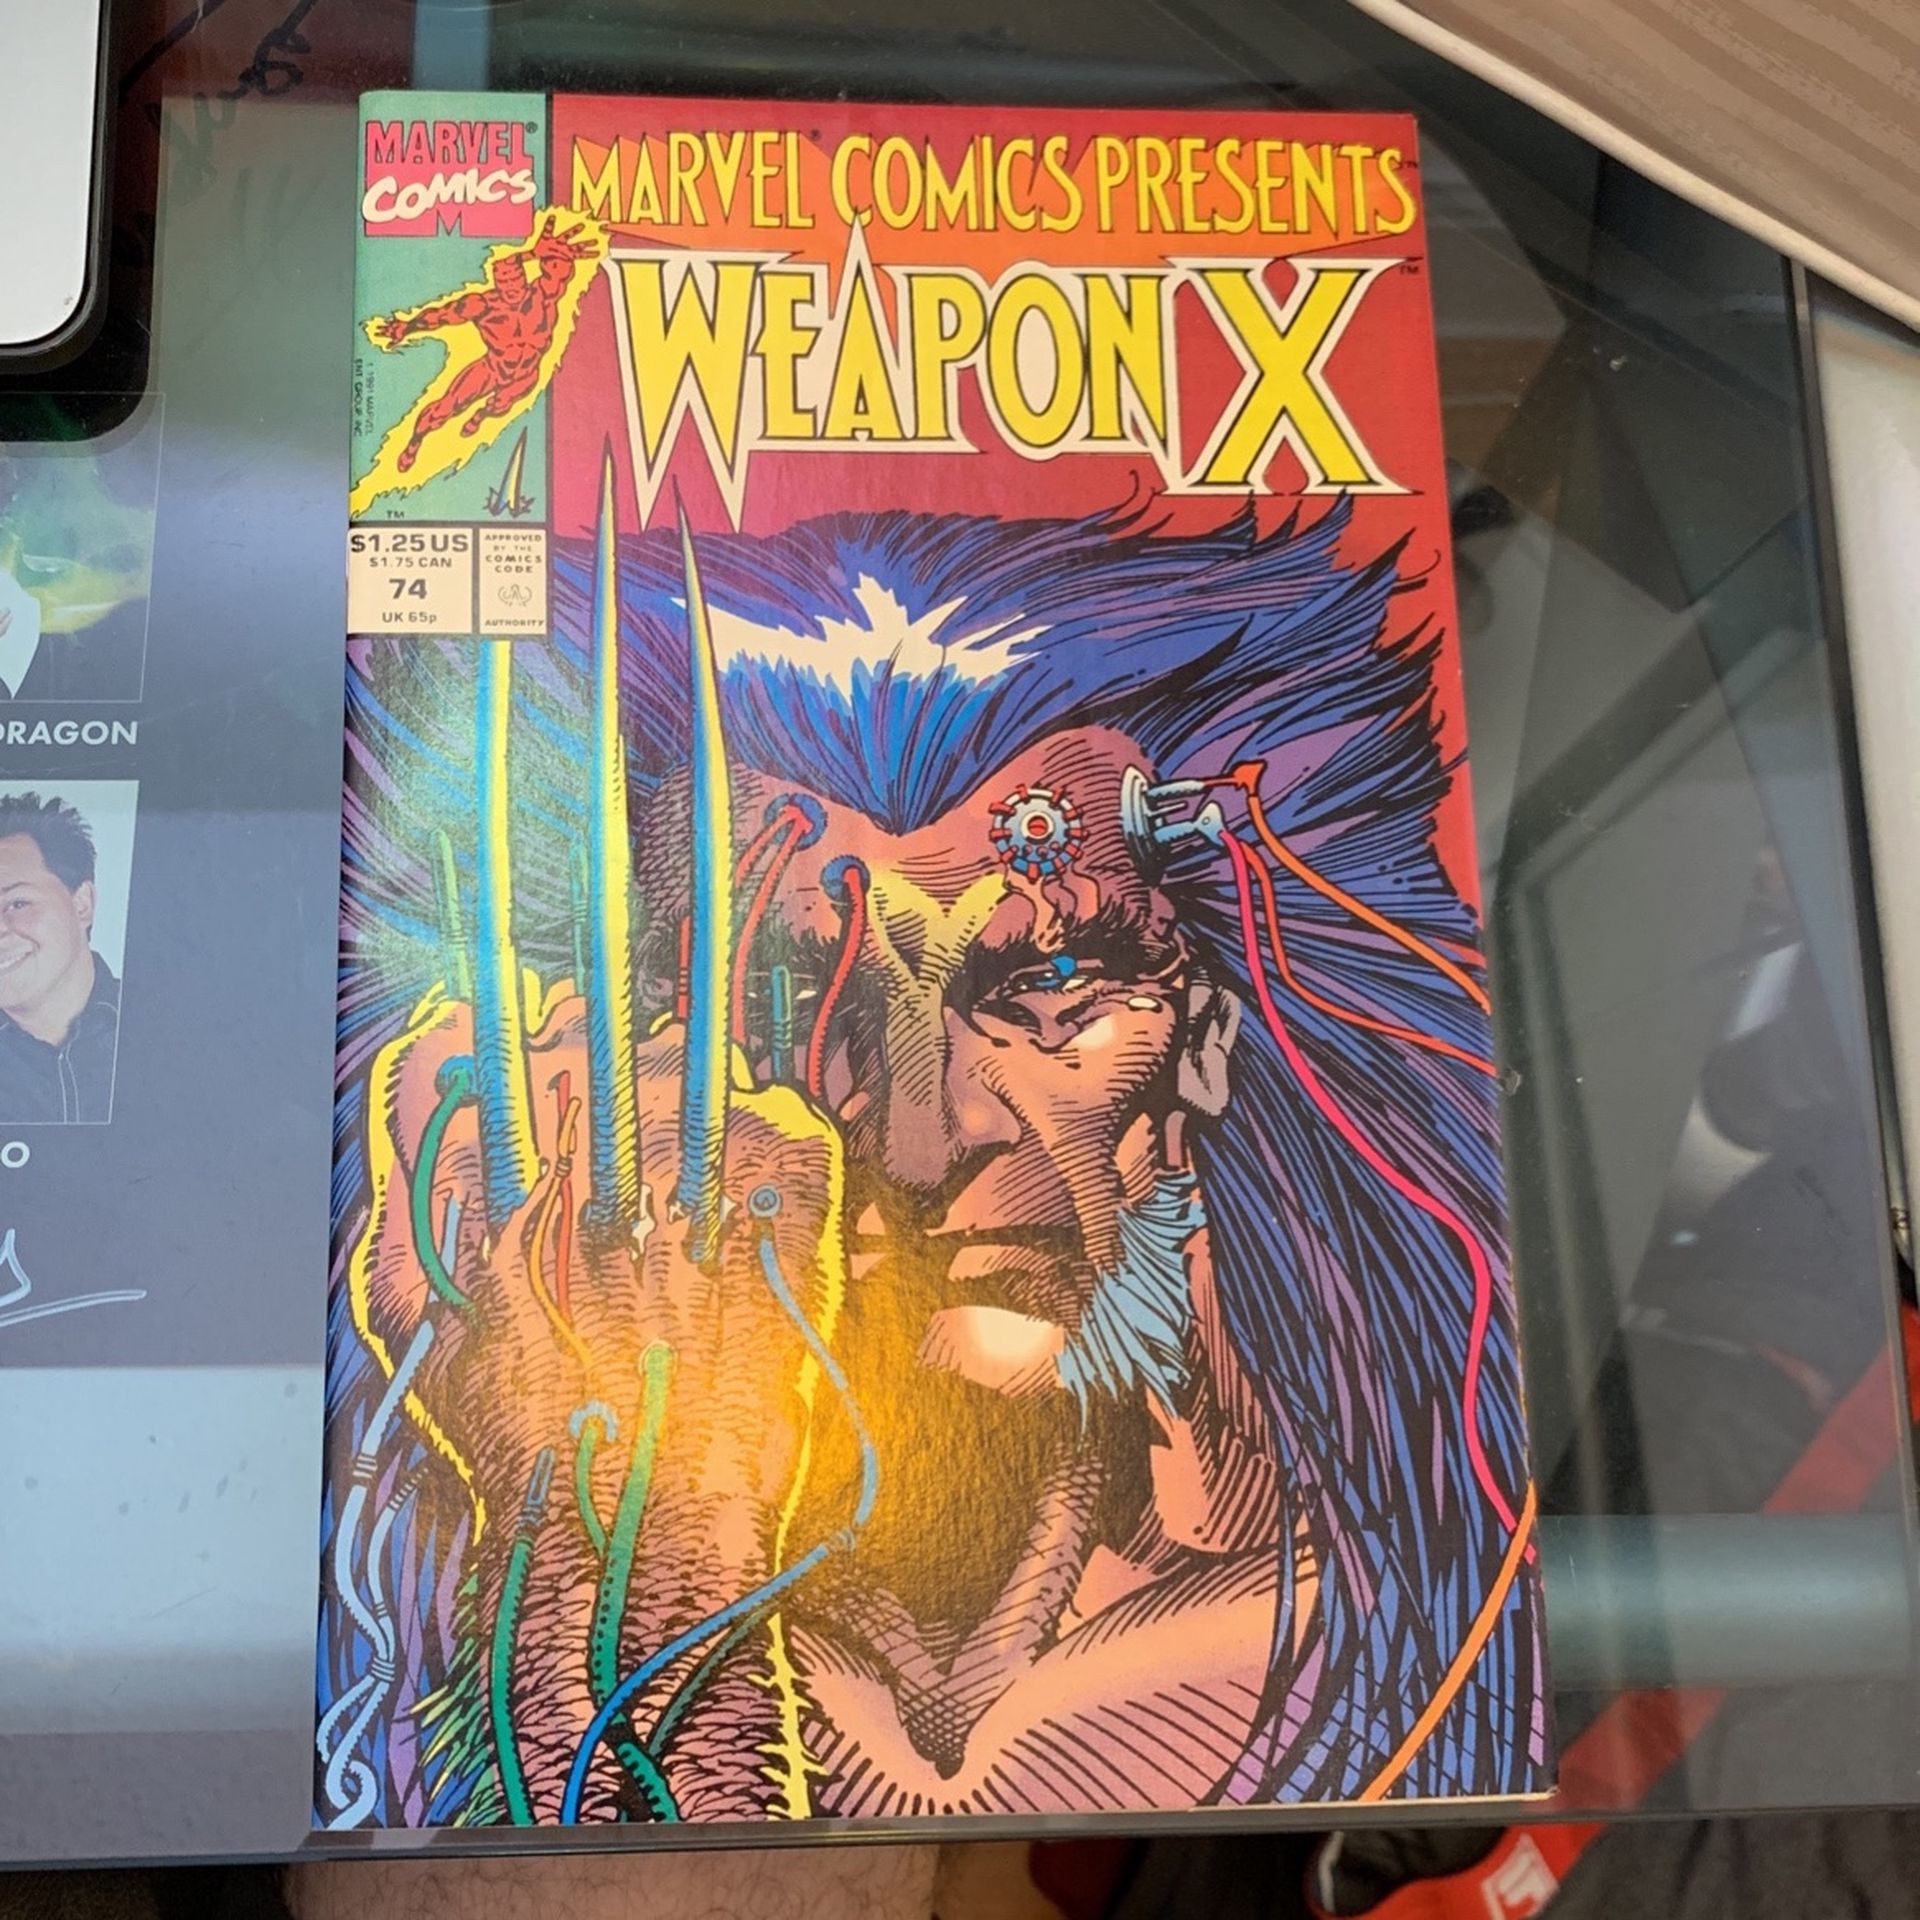 Marvel Comics Presents Weapon X-74